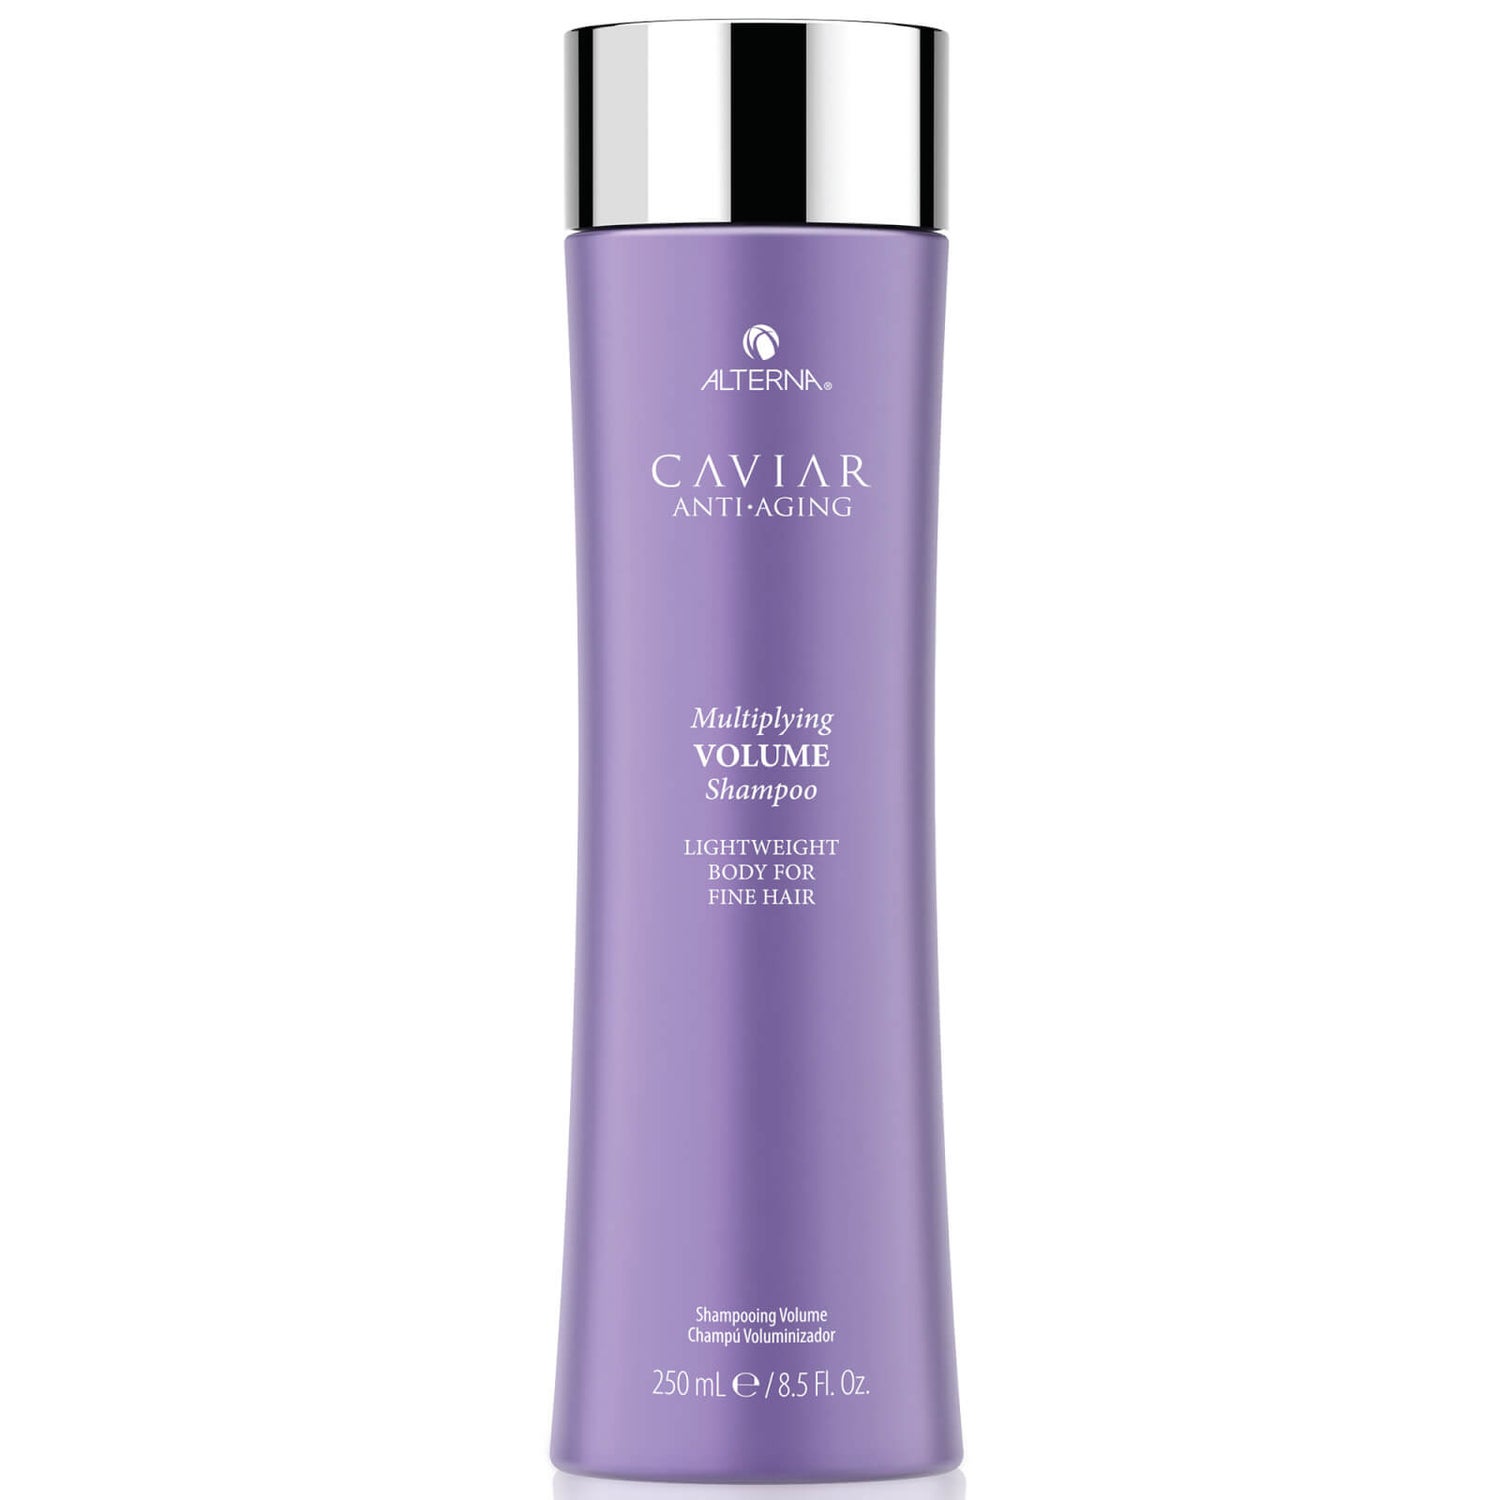 Alterna CAVIAR Anti-Aging Multiplying Volume Shampoo 8.5 oz